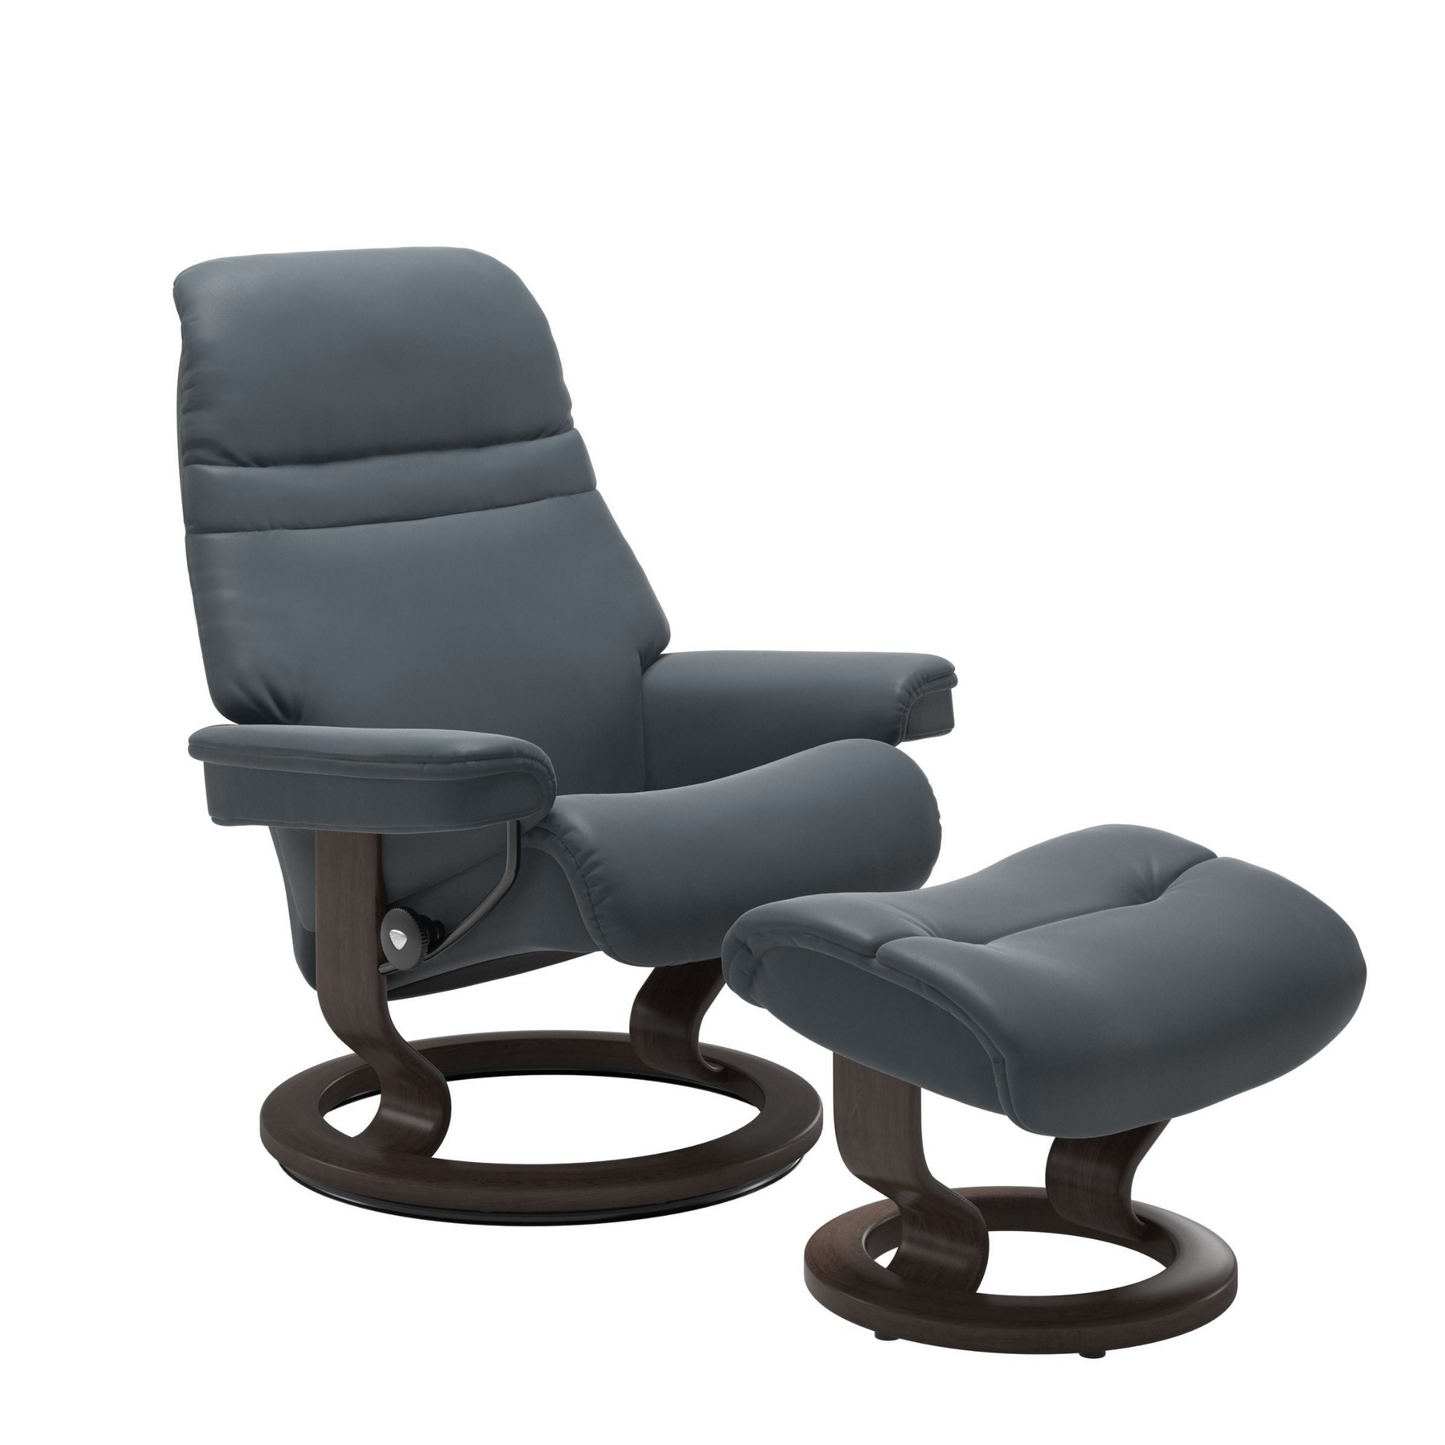 Sunrise Medium Recliner Chair & Stool Classic Base by Stressless